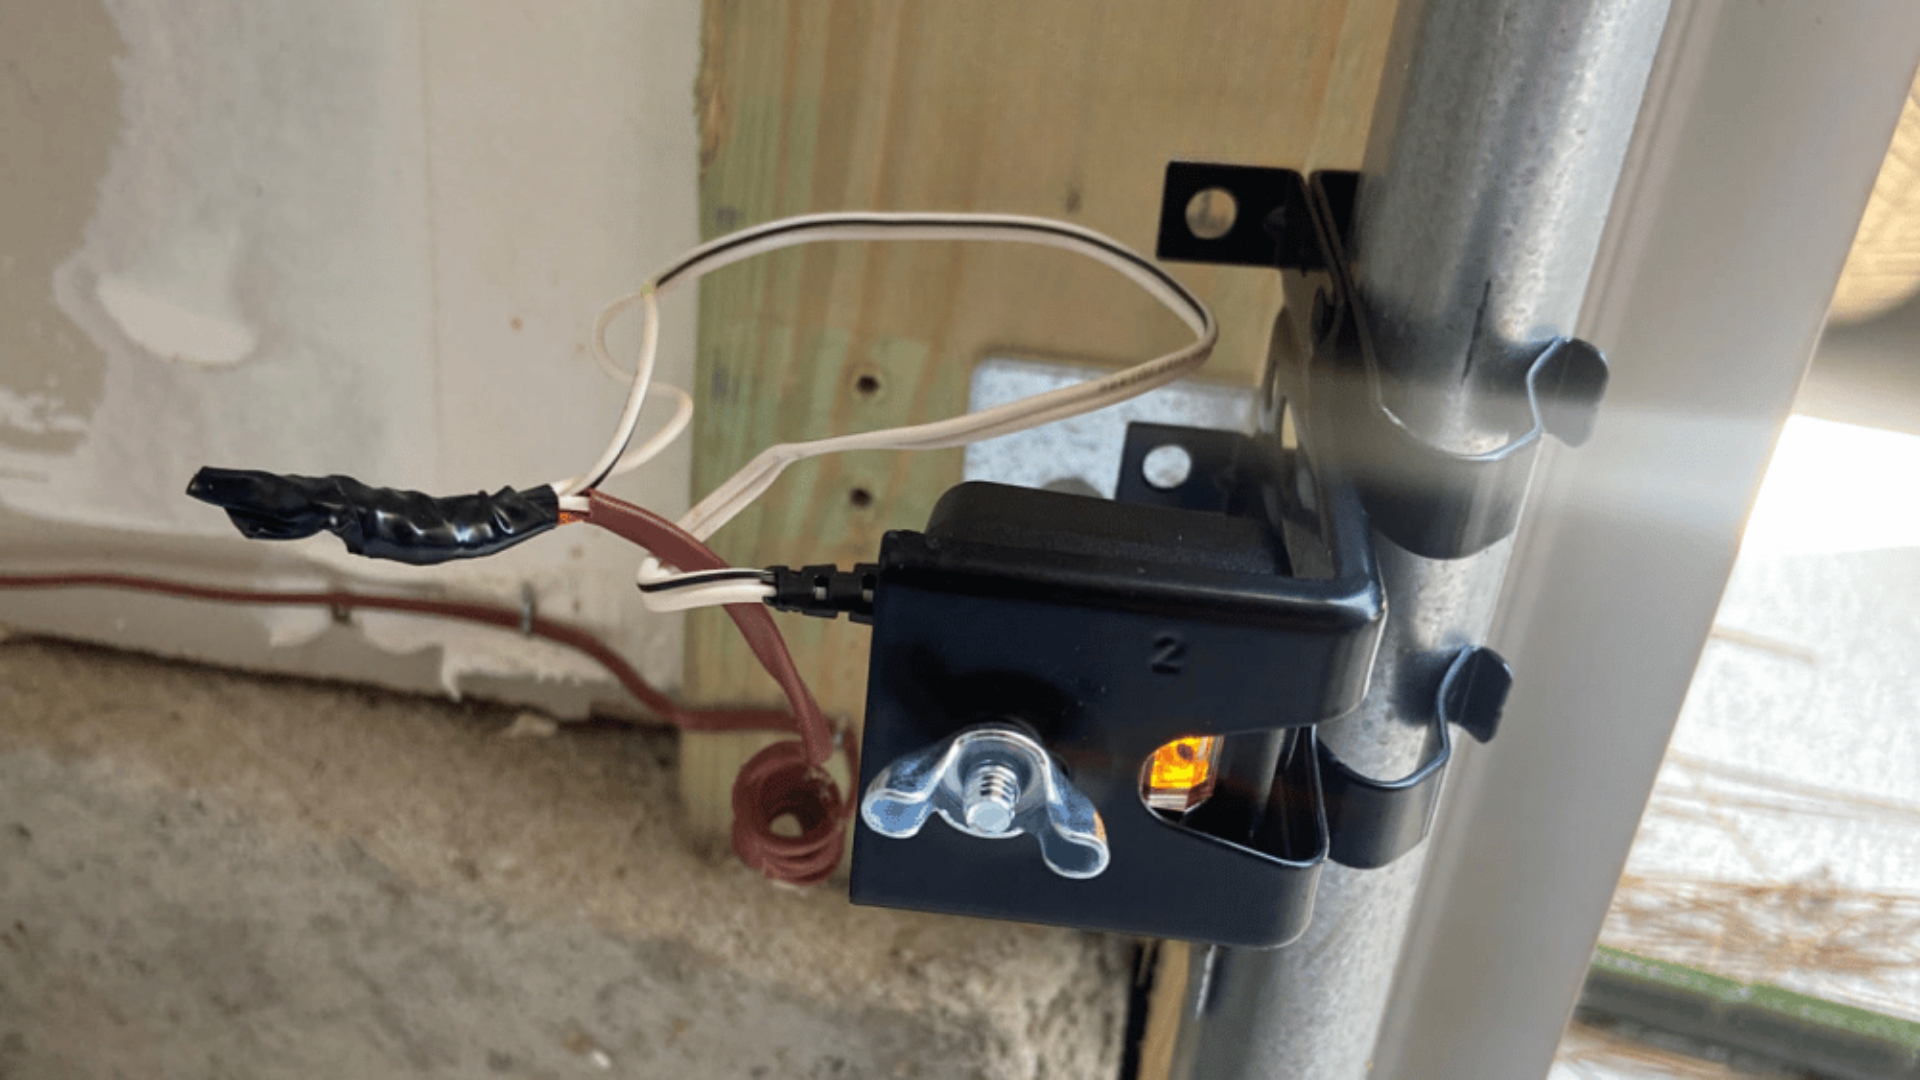 A newly installed garage door sensor